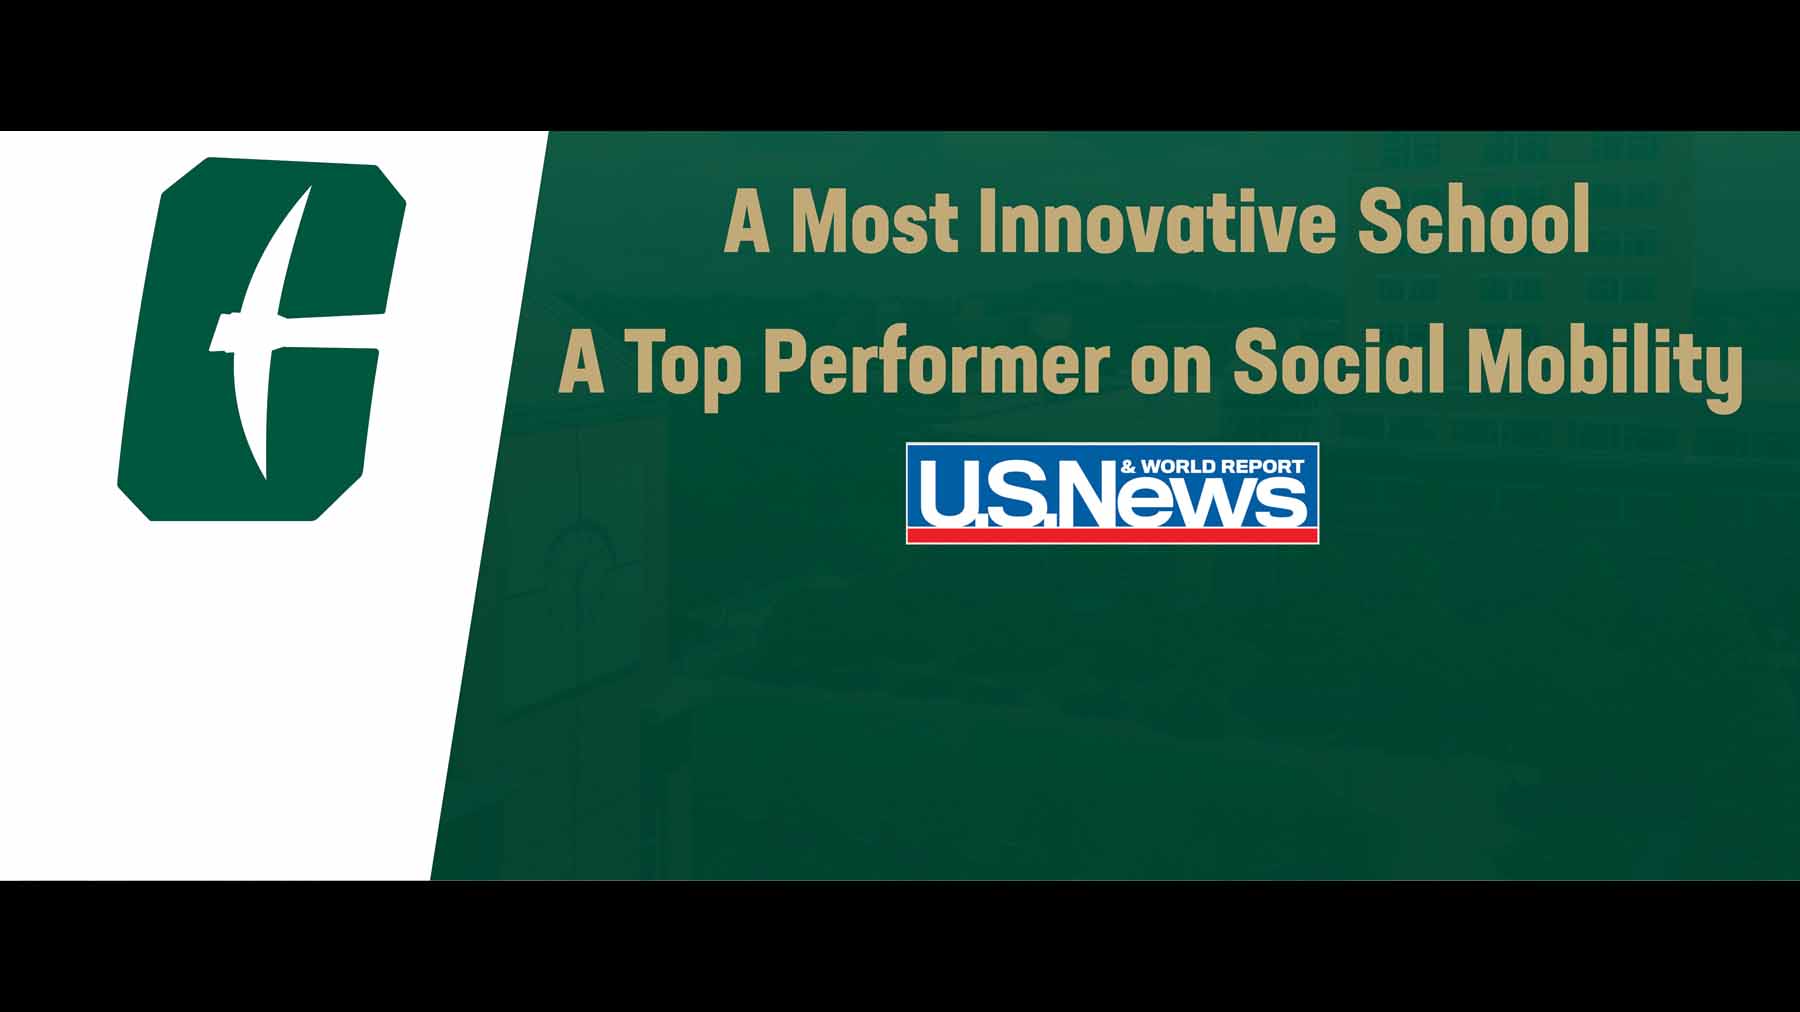 U.S. News & World Report recognizes University for social mobility, innovation 